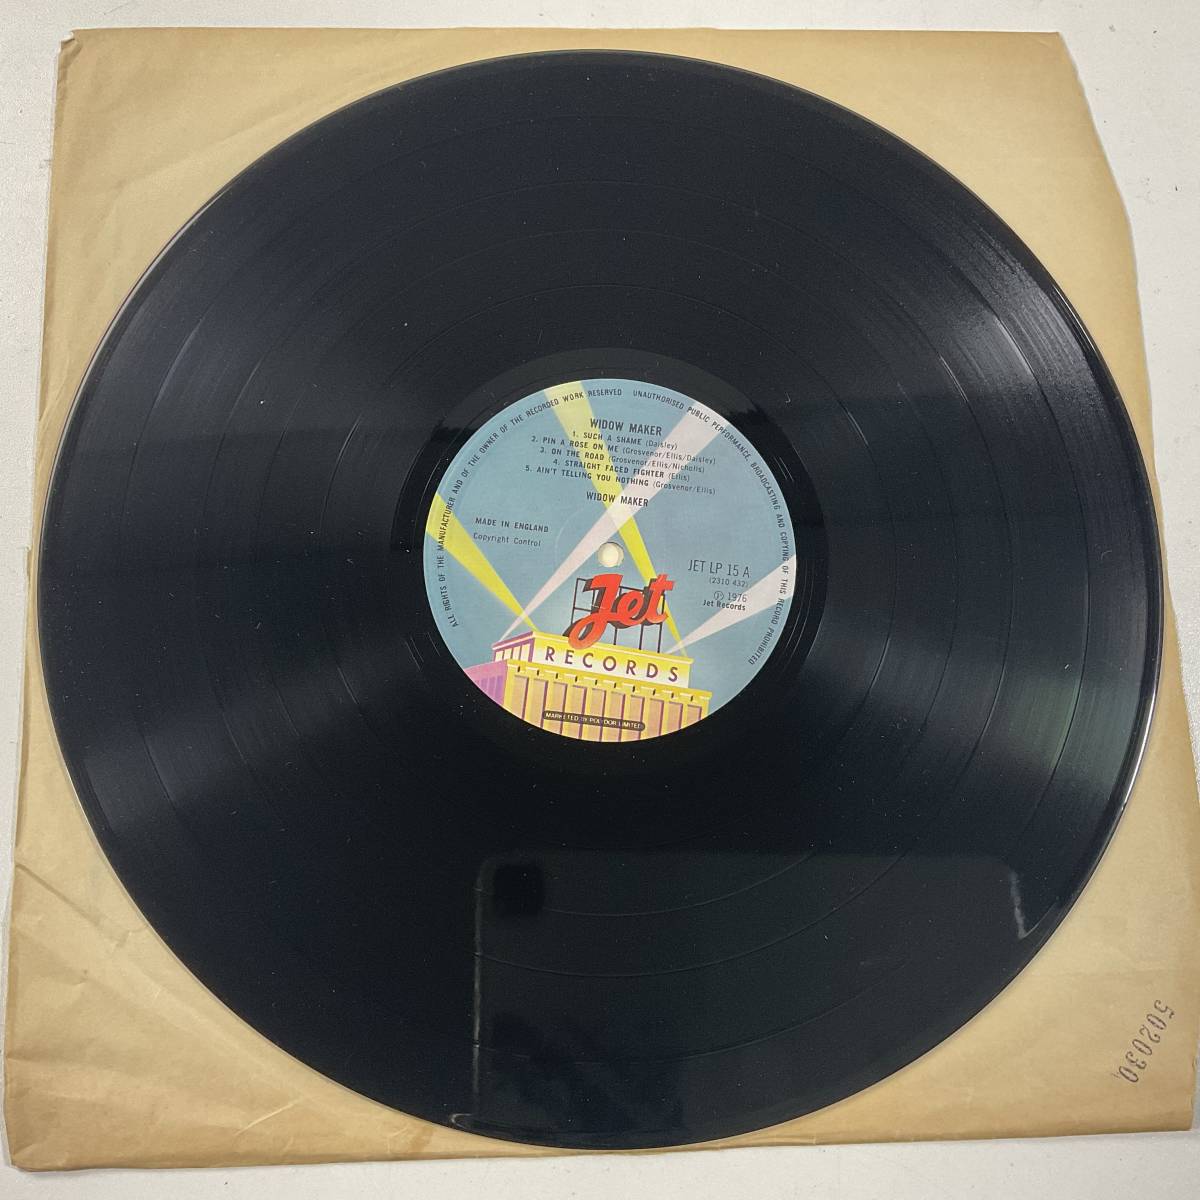 1976 UK Original WIDOW MAKER WidowmakerJet Records JET LP 15 英国 オリジナル レコード LP コンディション良好 傷ナシ 美盤_画像3